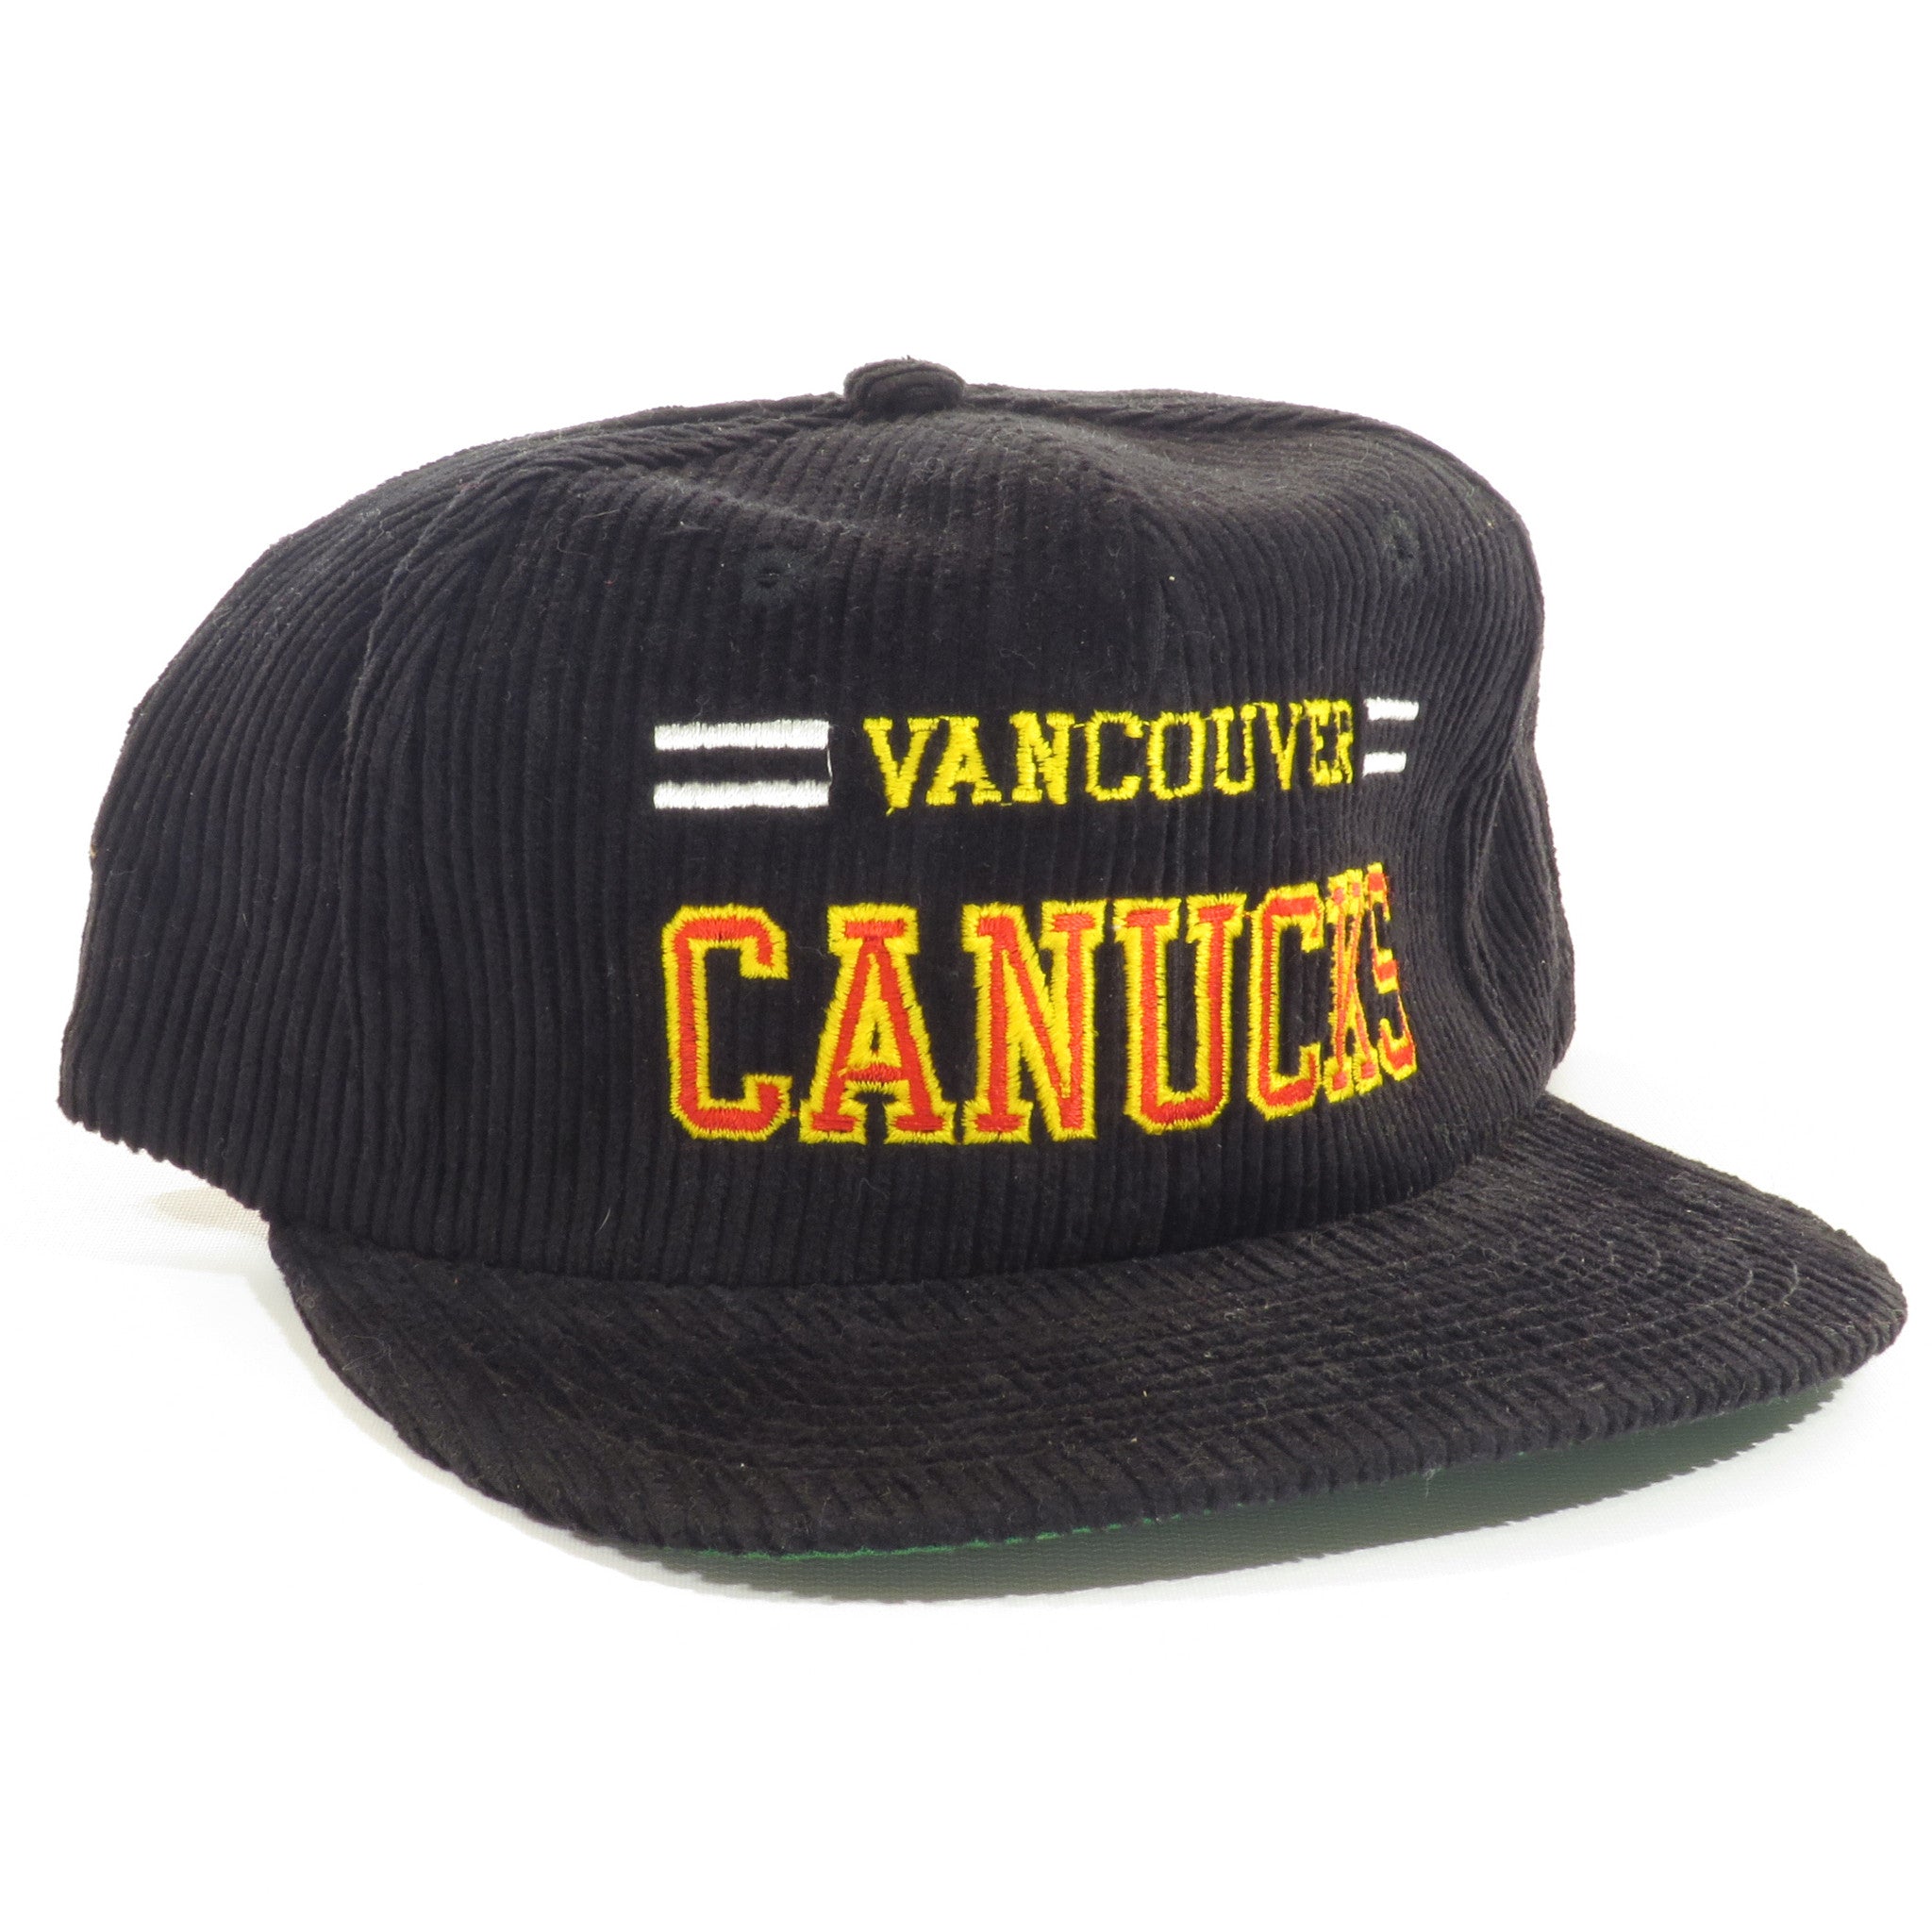 Vancouver Canucks New Era 950 Corduroy Skate Snapback 20 Hat